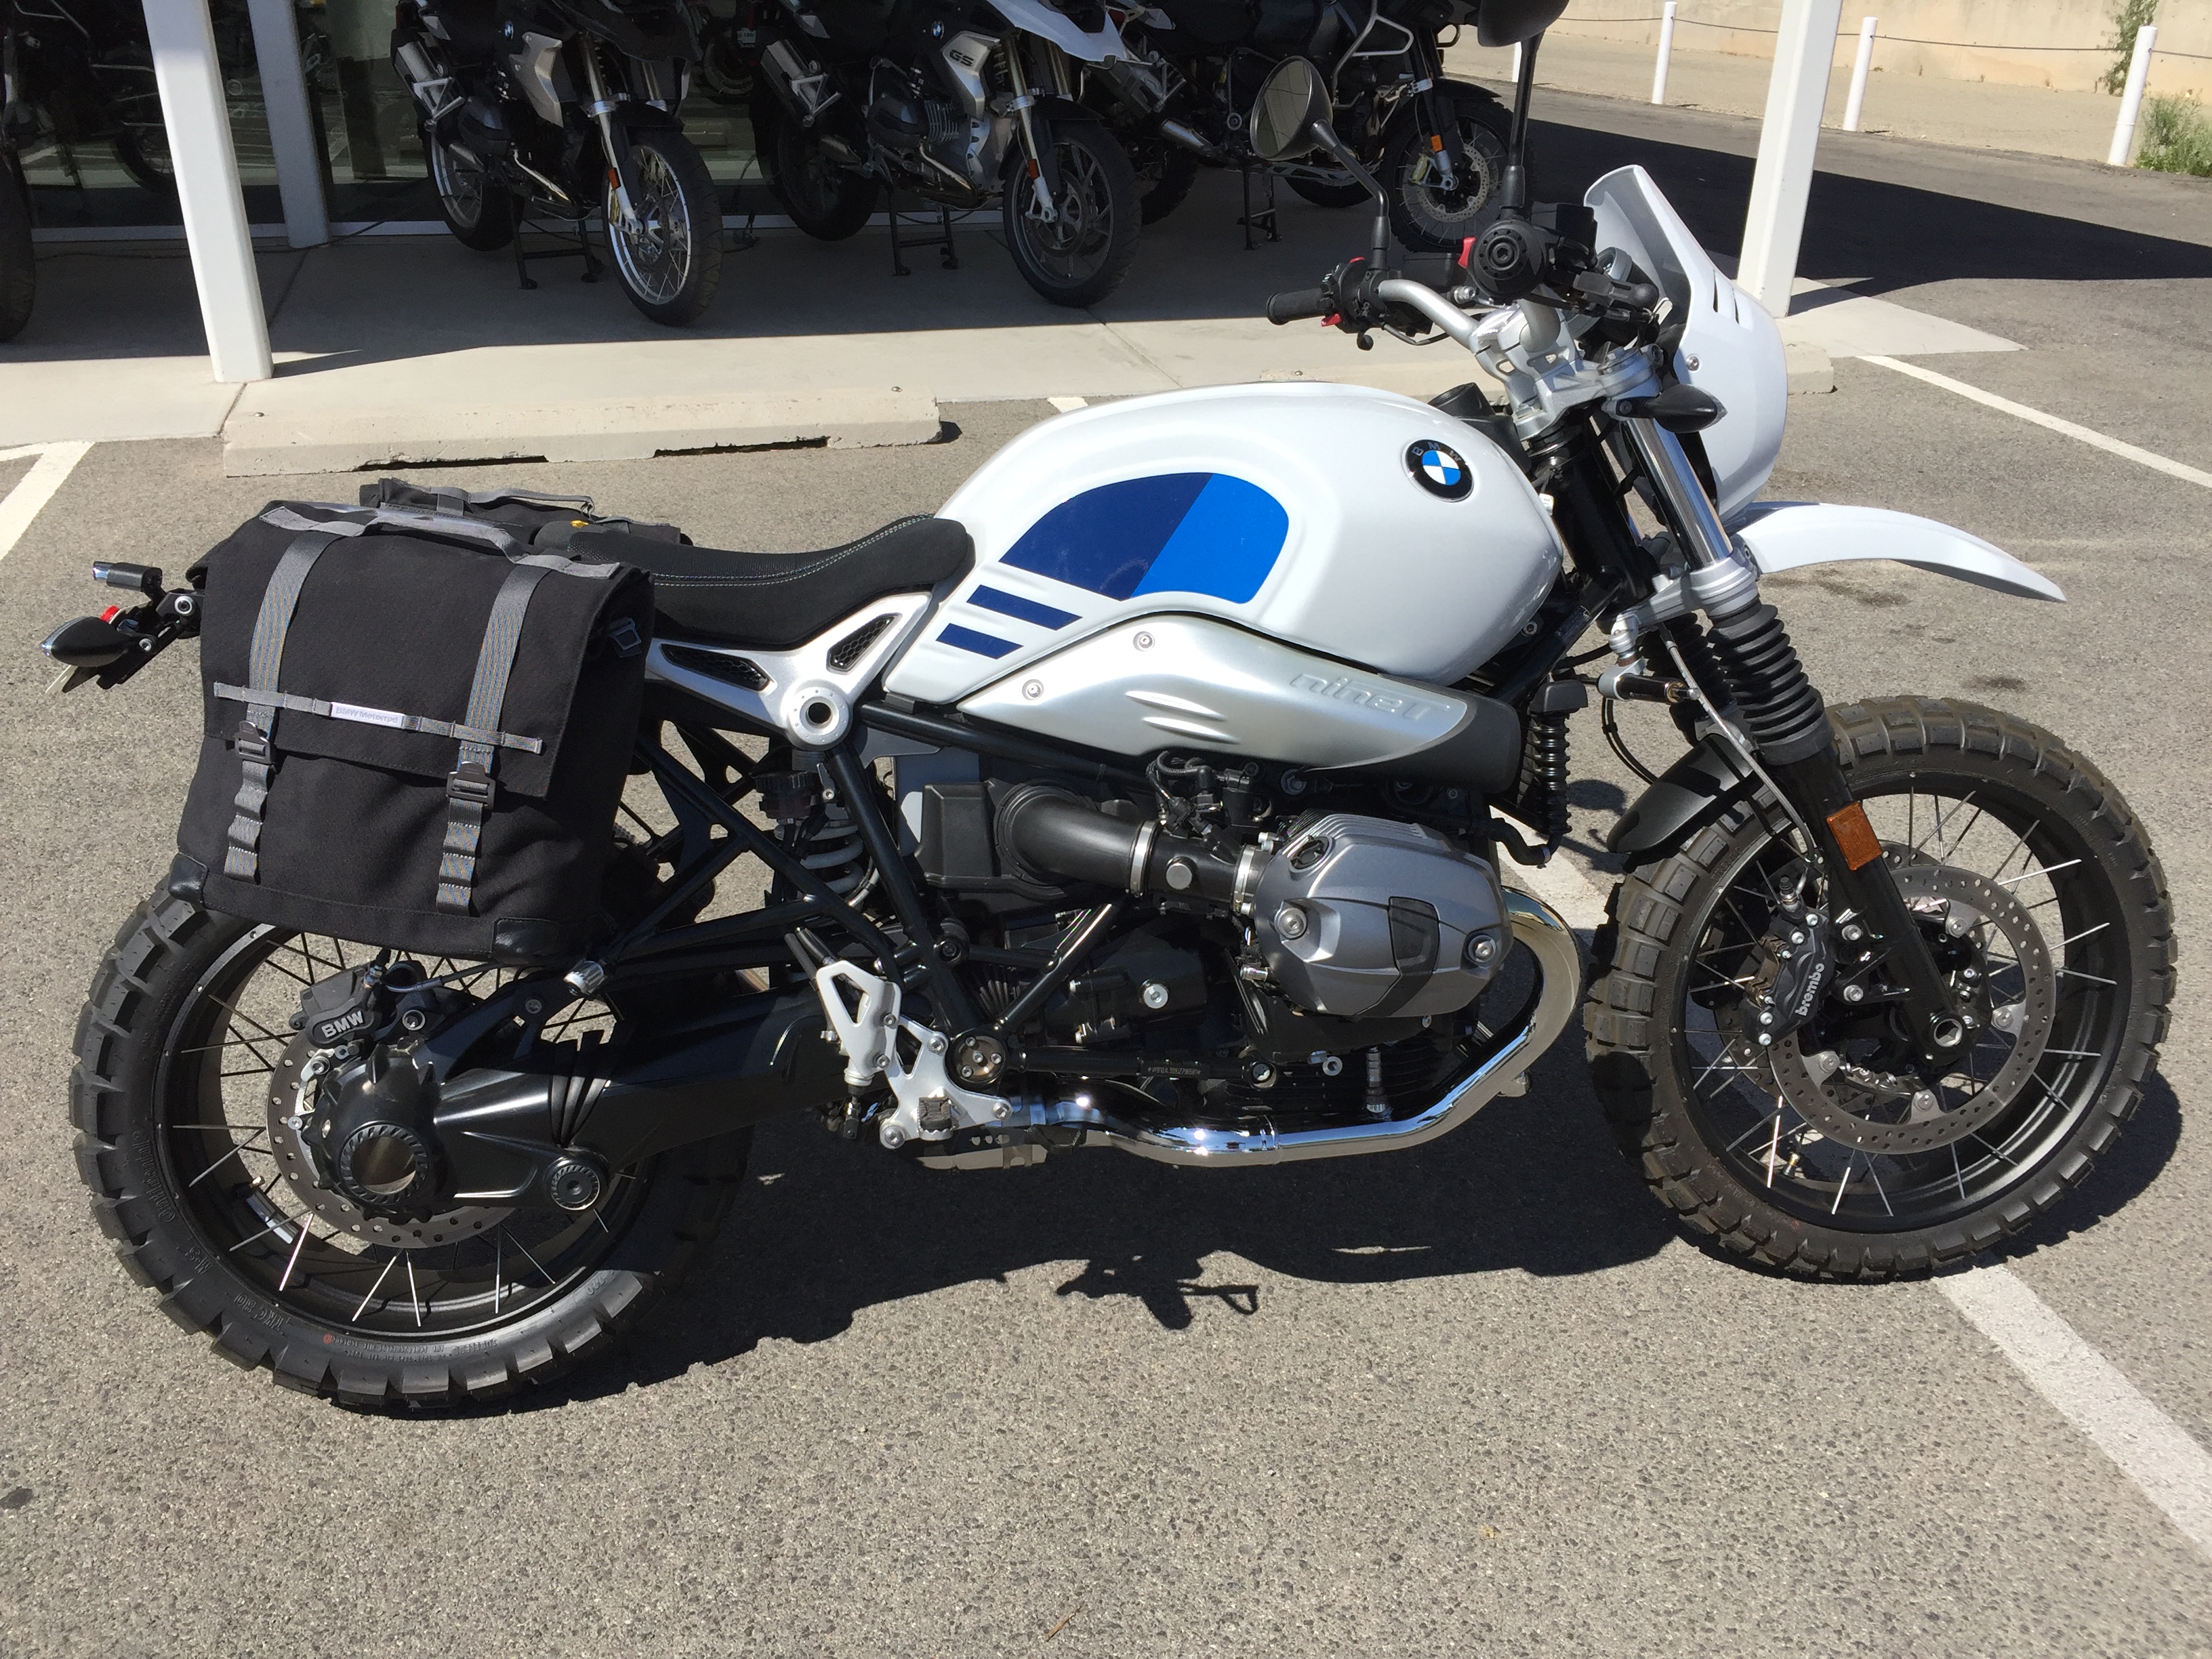 New BMW Motorcycles - 17R9 | Santa Fe BMW Motorcycles ...